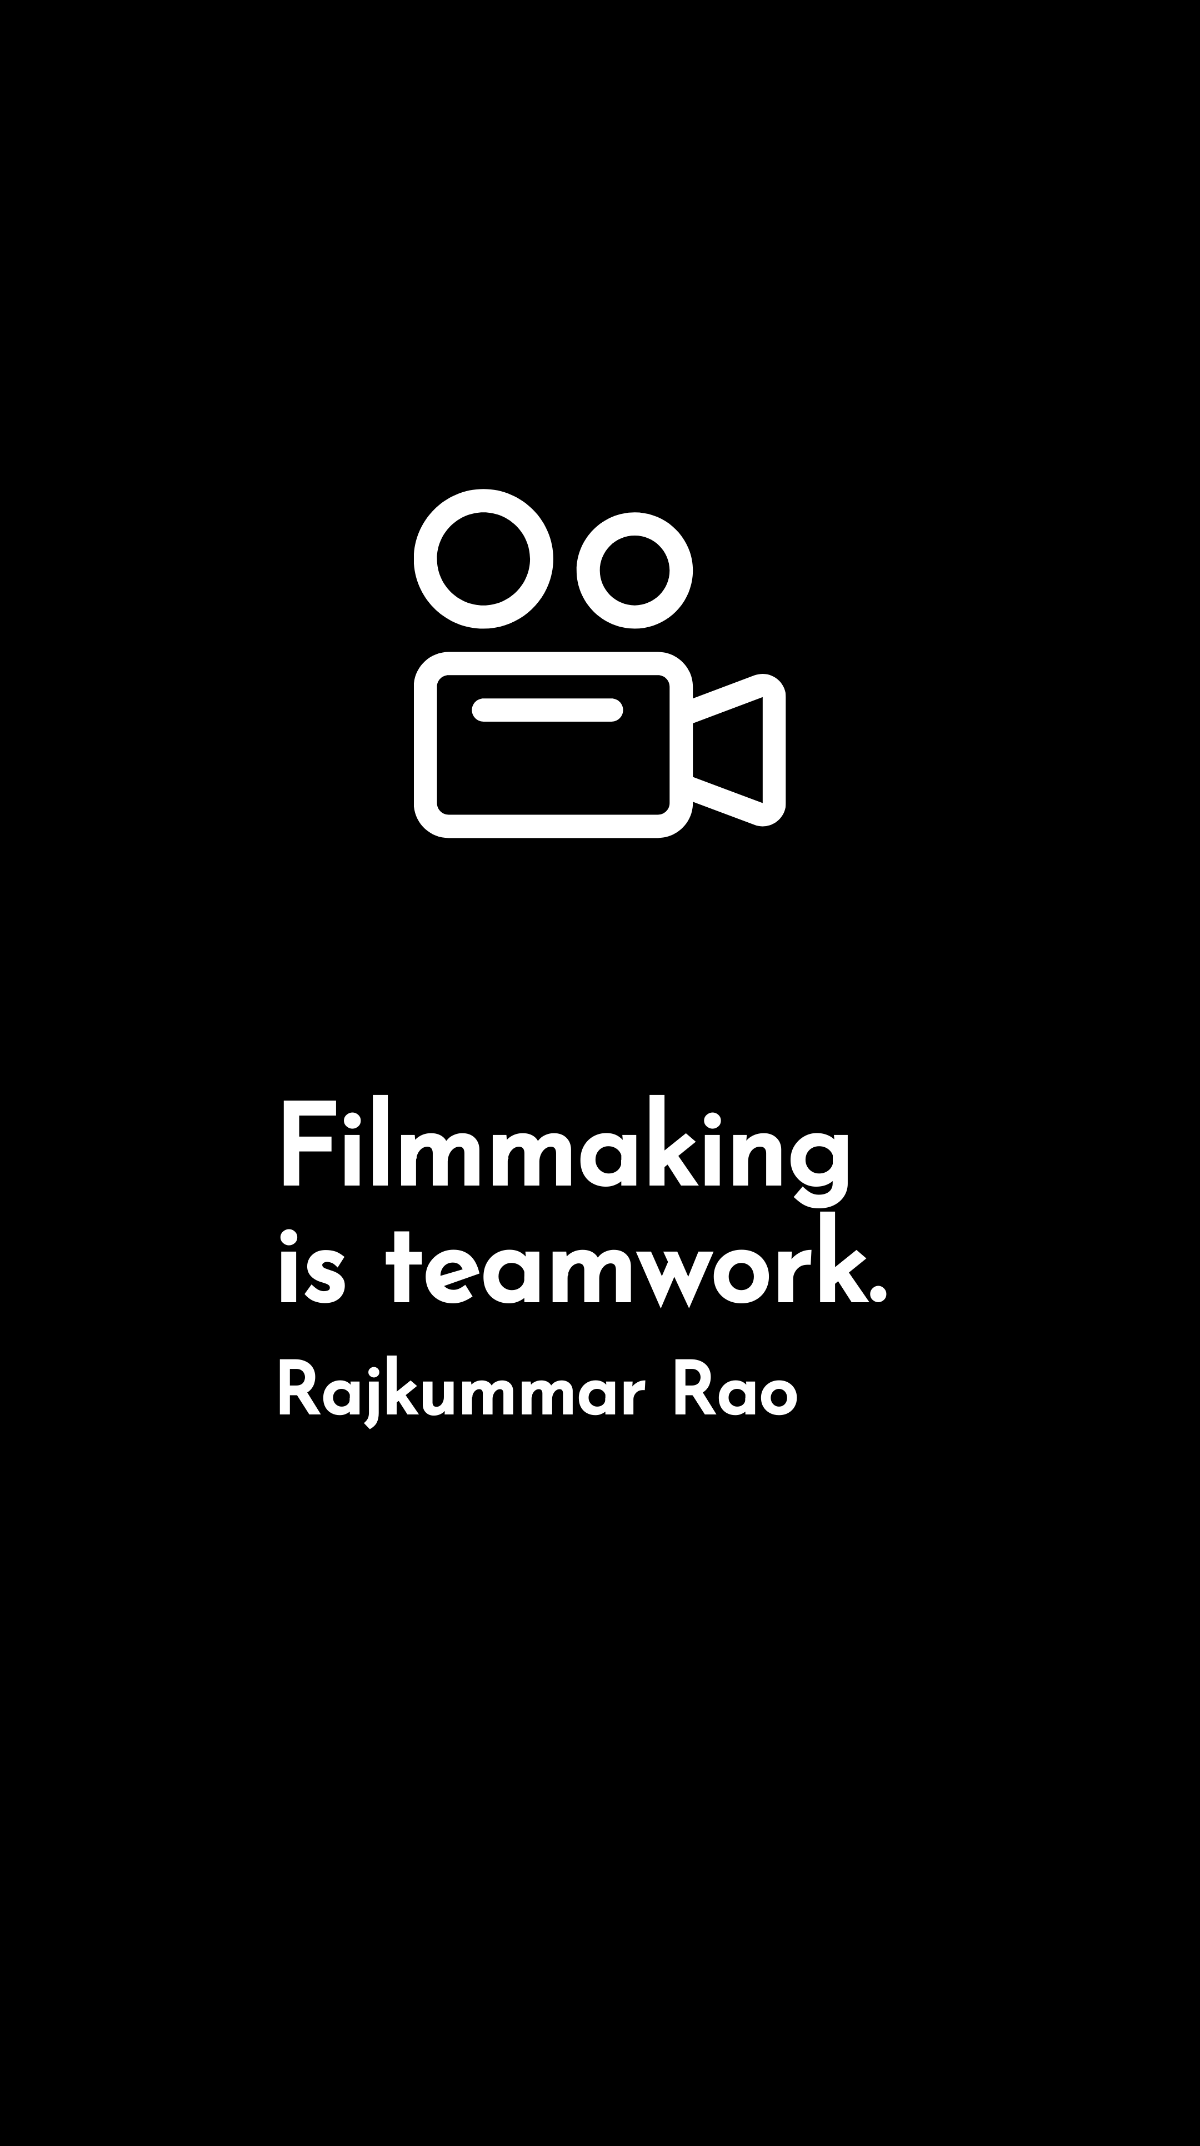 Free Rajkummar Rao - Filmmaking is teamwork. Template